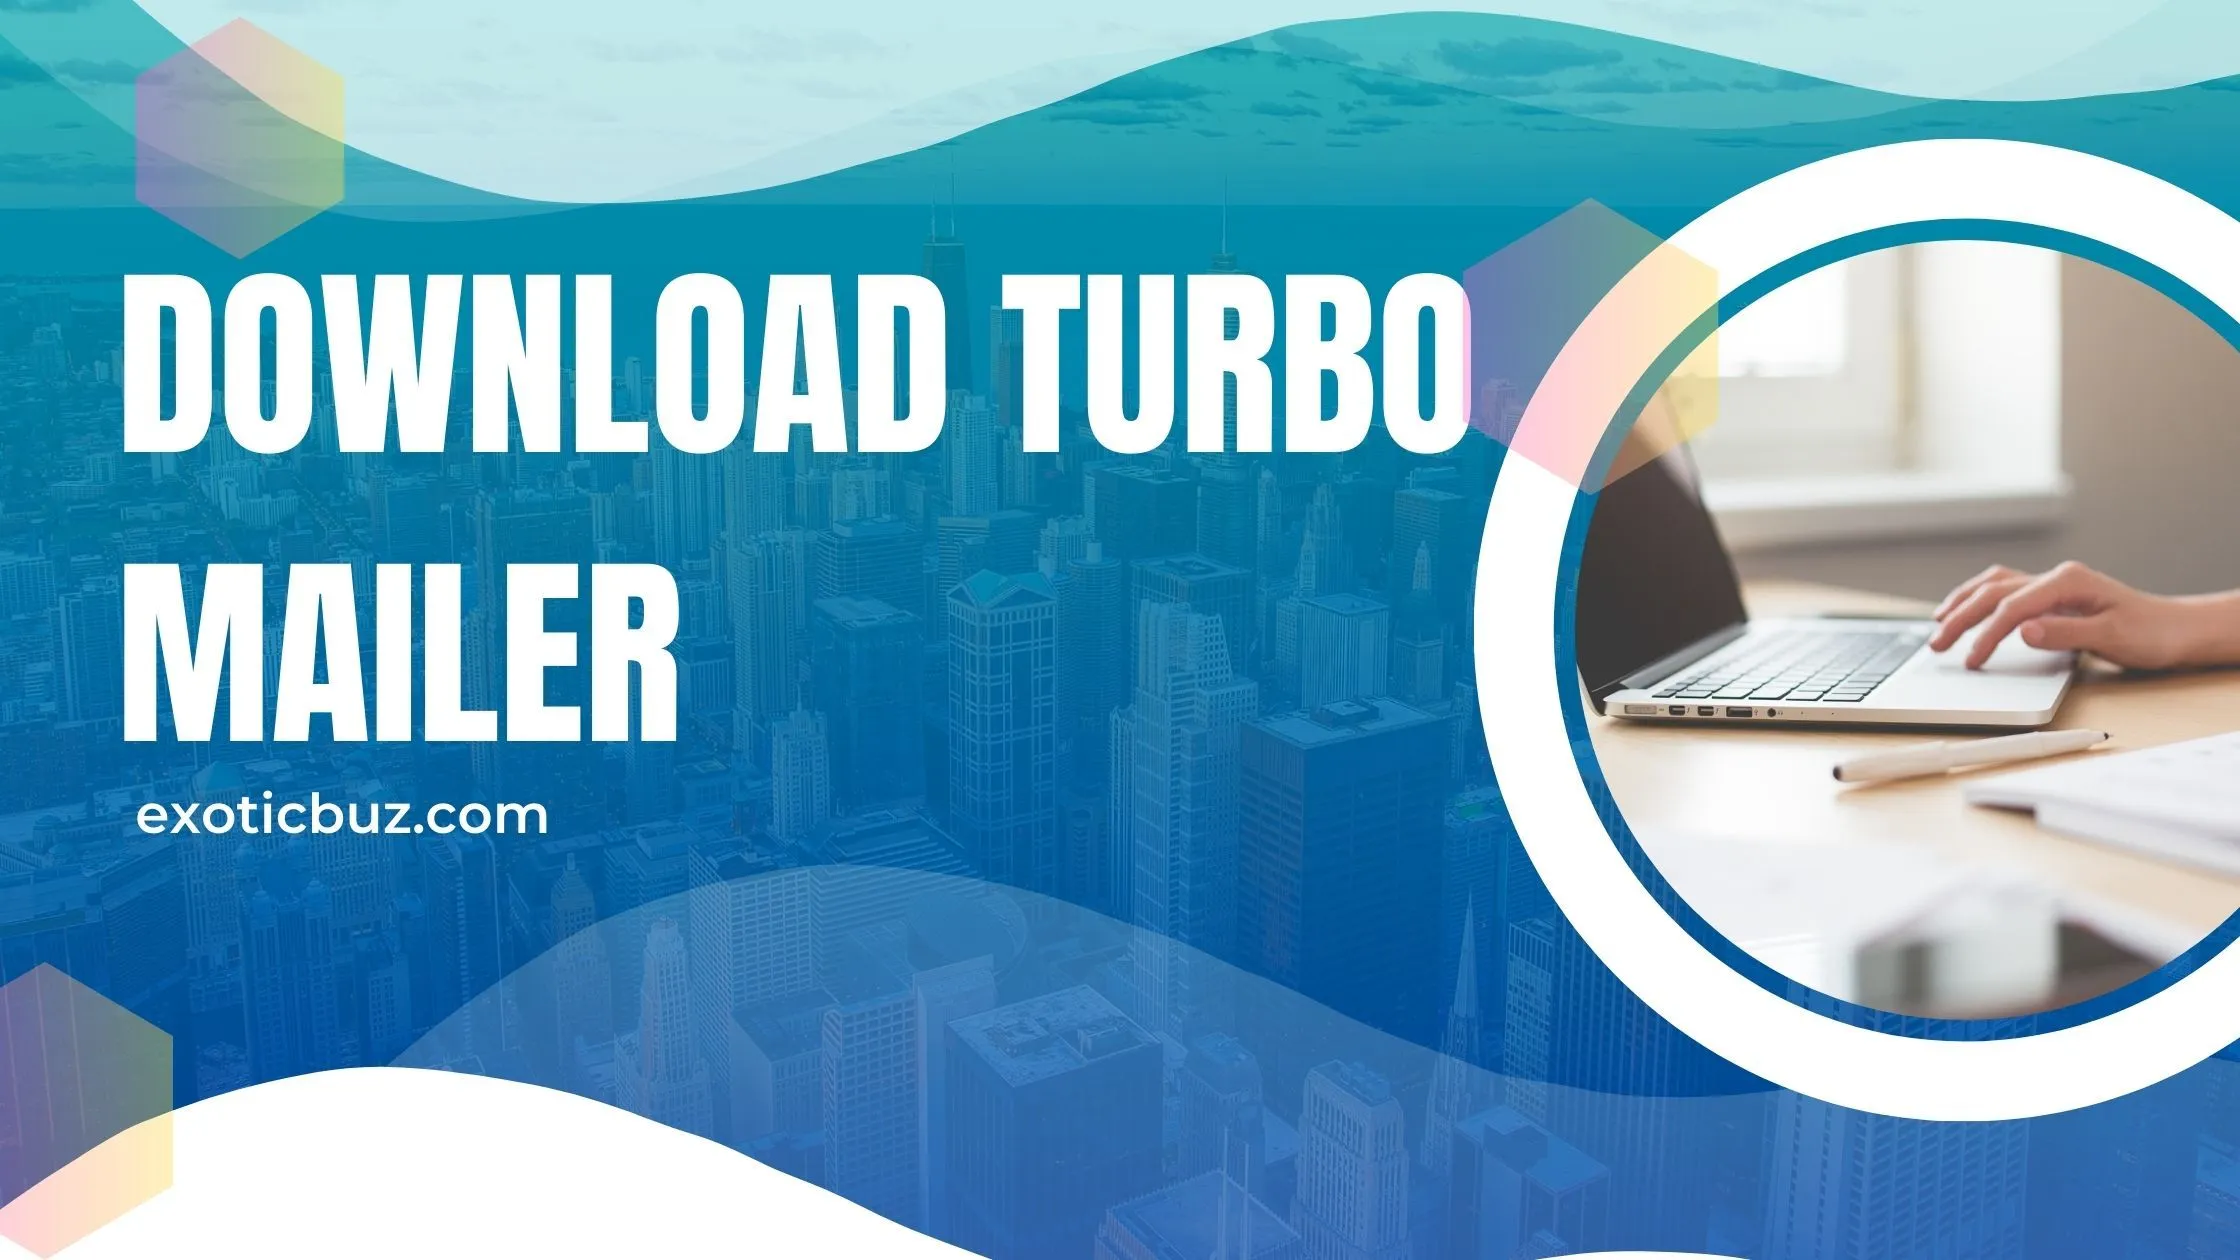 Download Turbo Mailer